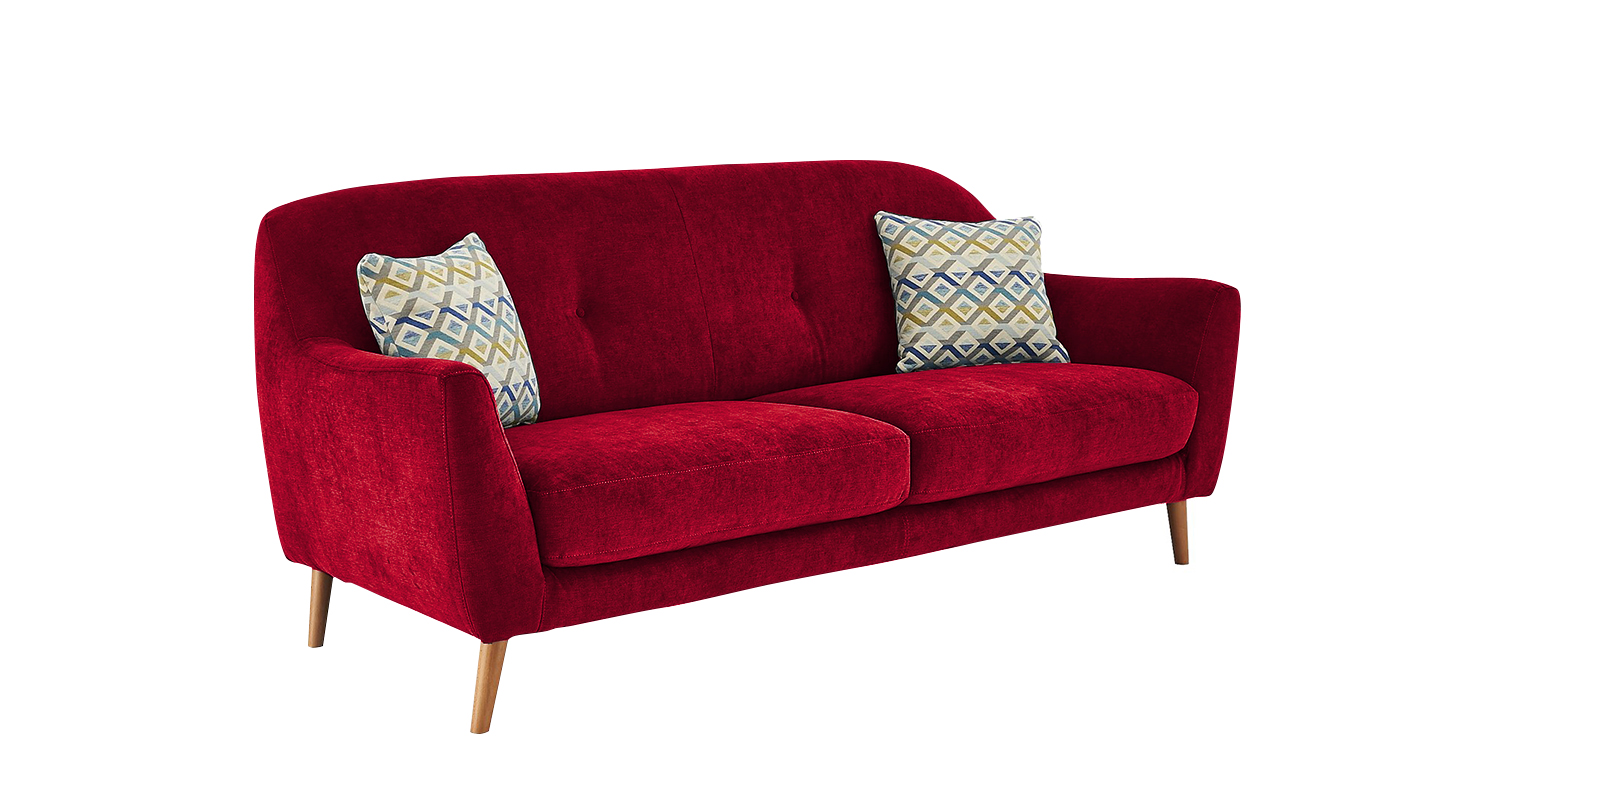 Simplistic Fabric 3 Seater Sofa in Red Colour - Dreamzz Furniture ...